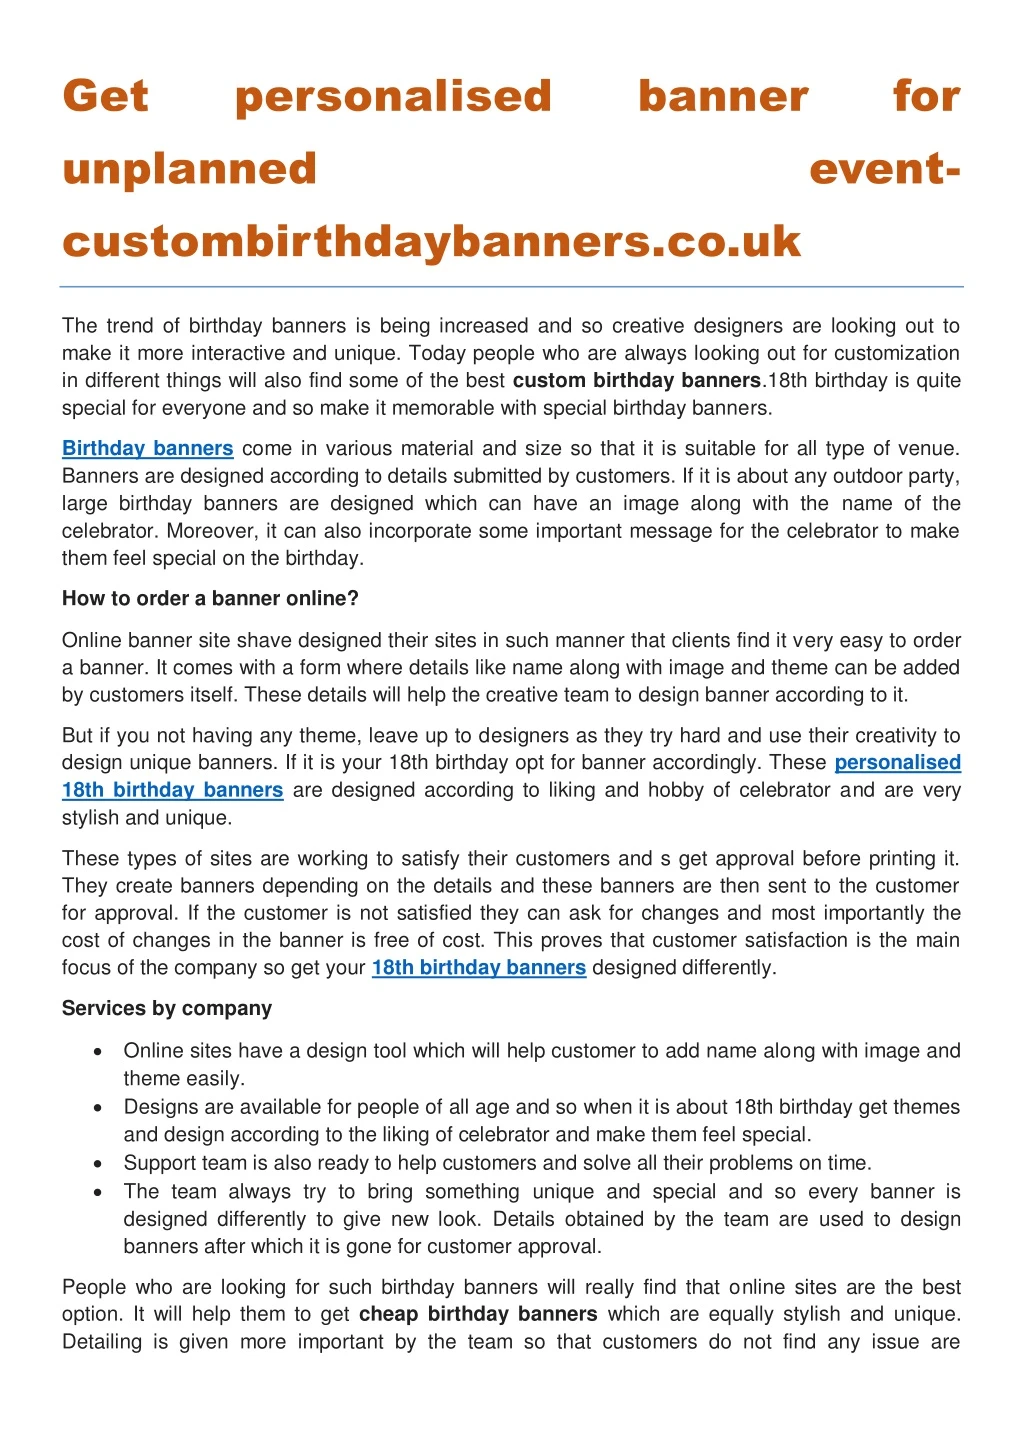 get unplanned custombirthdaybanners co uk